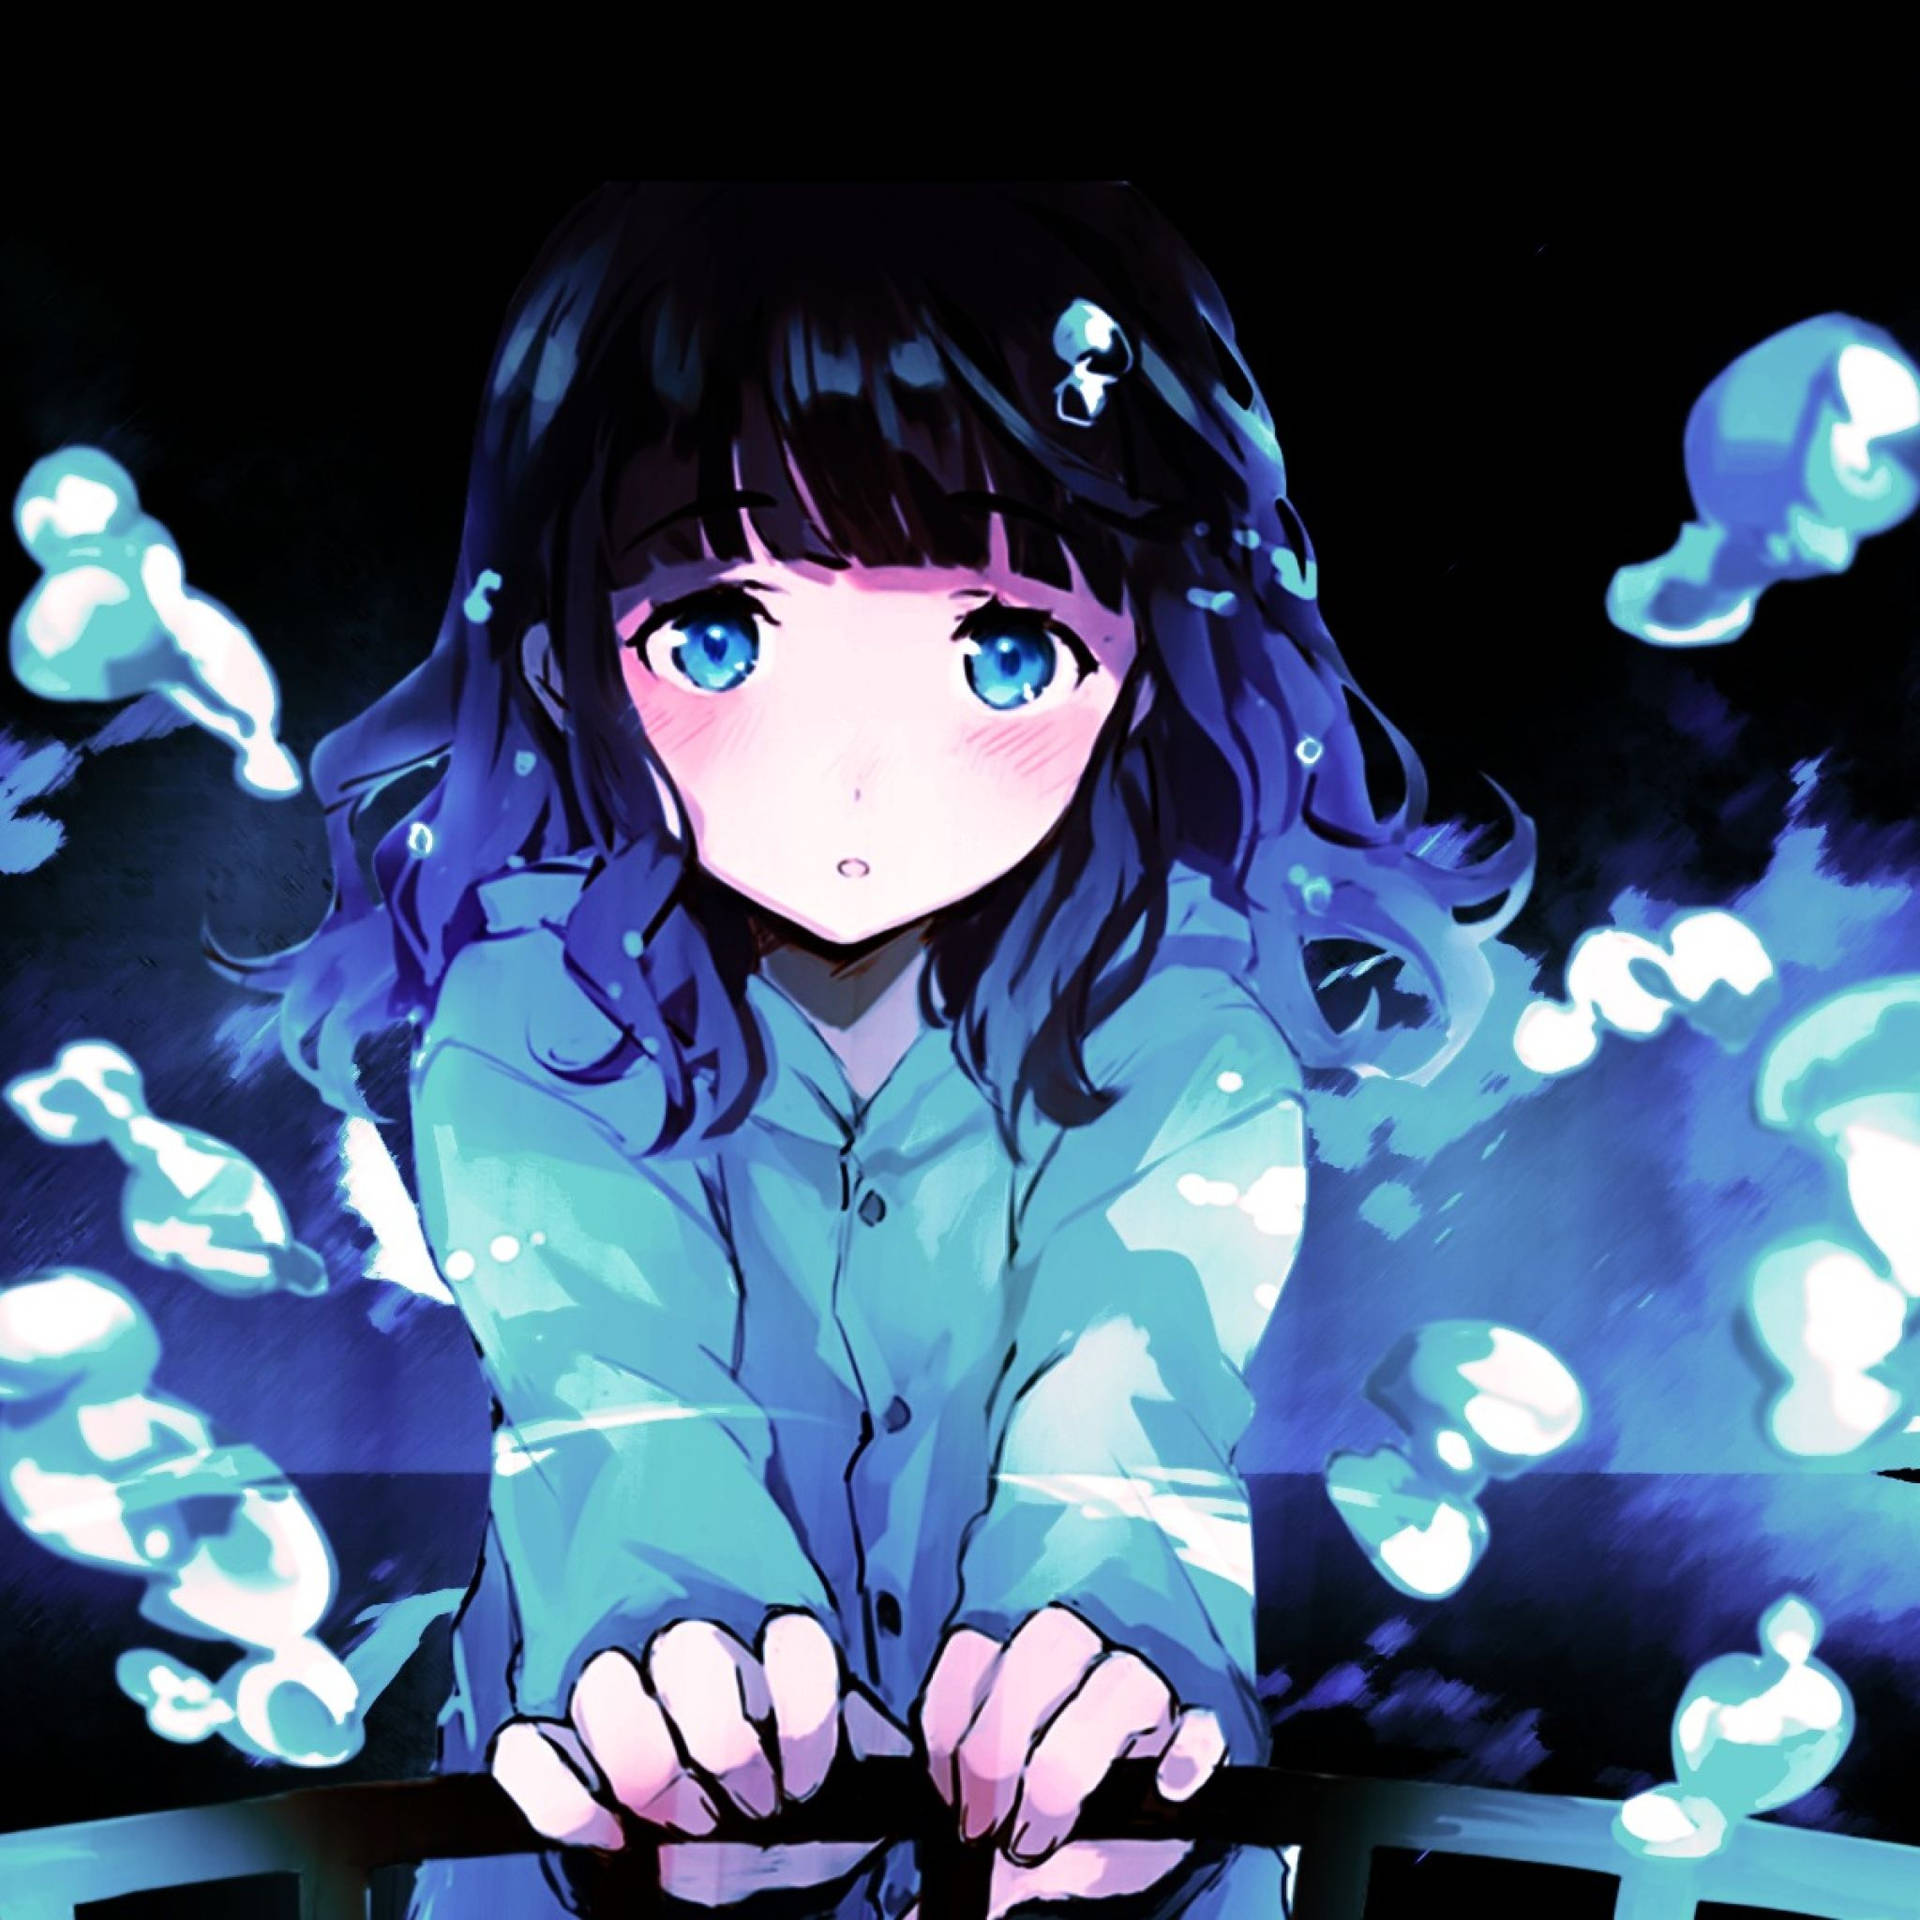 Sad Anime Girl In Blue Good PFP Wallpaper